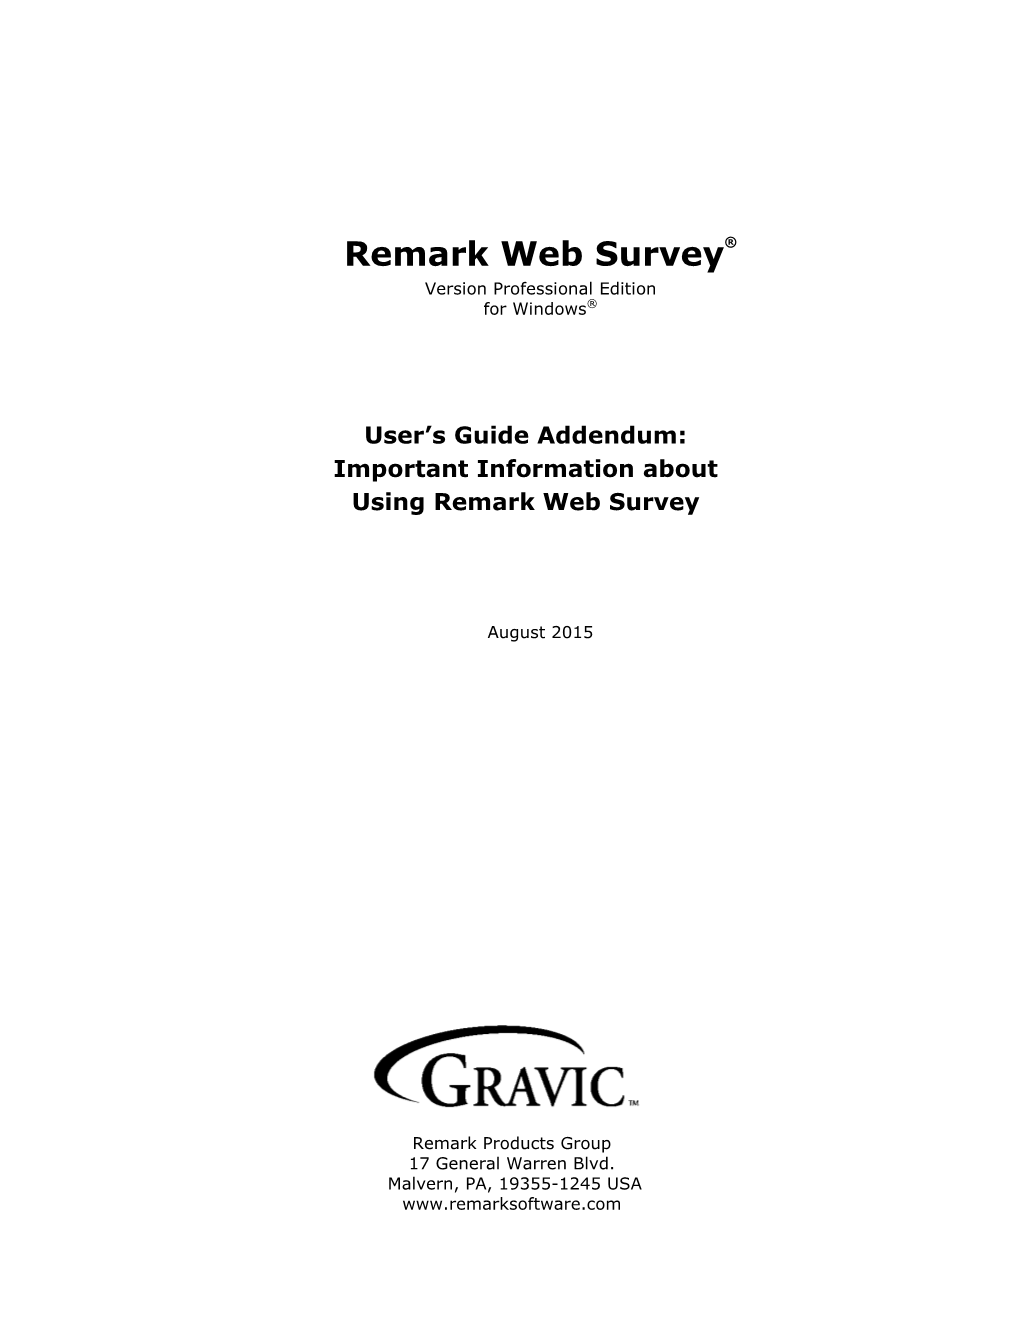 Remark Web Survey User Guide Addendum